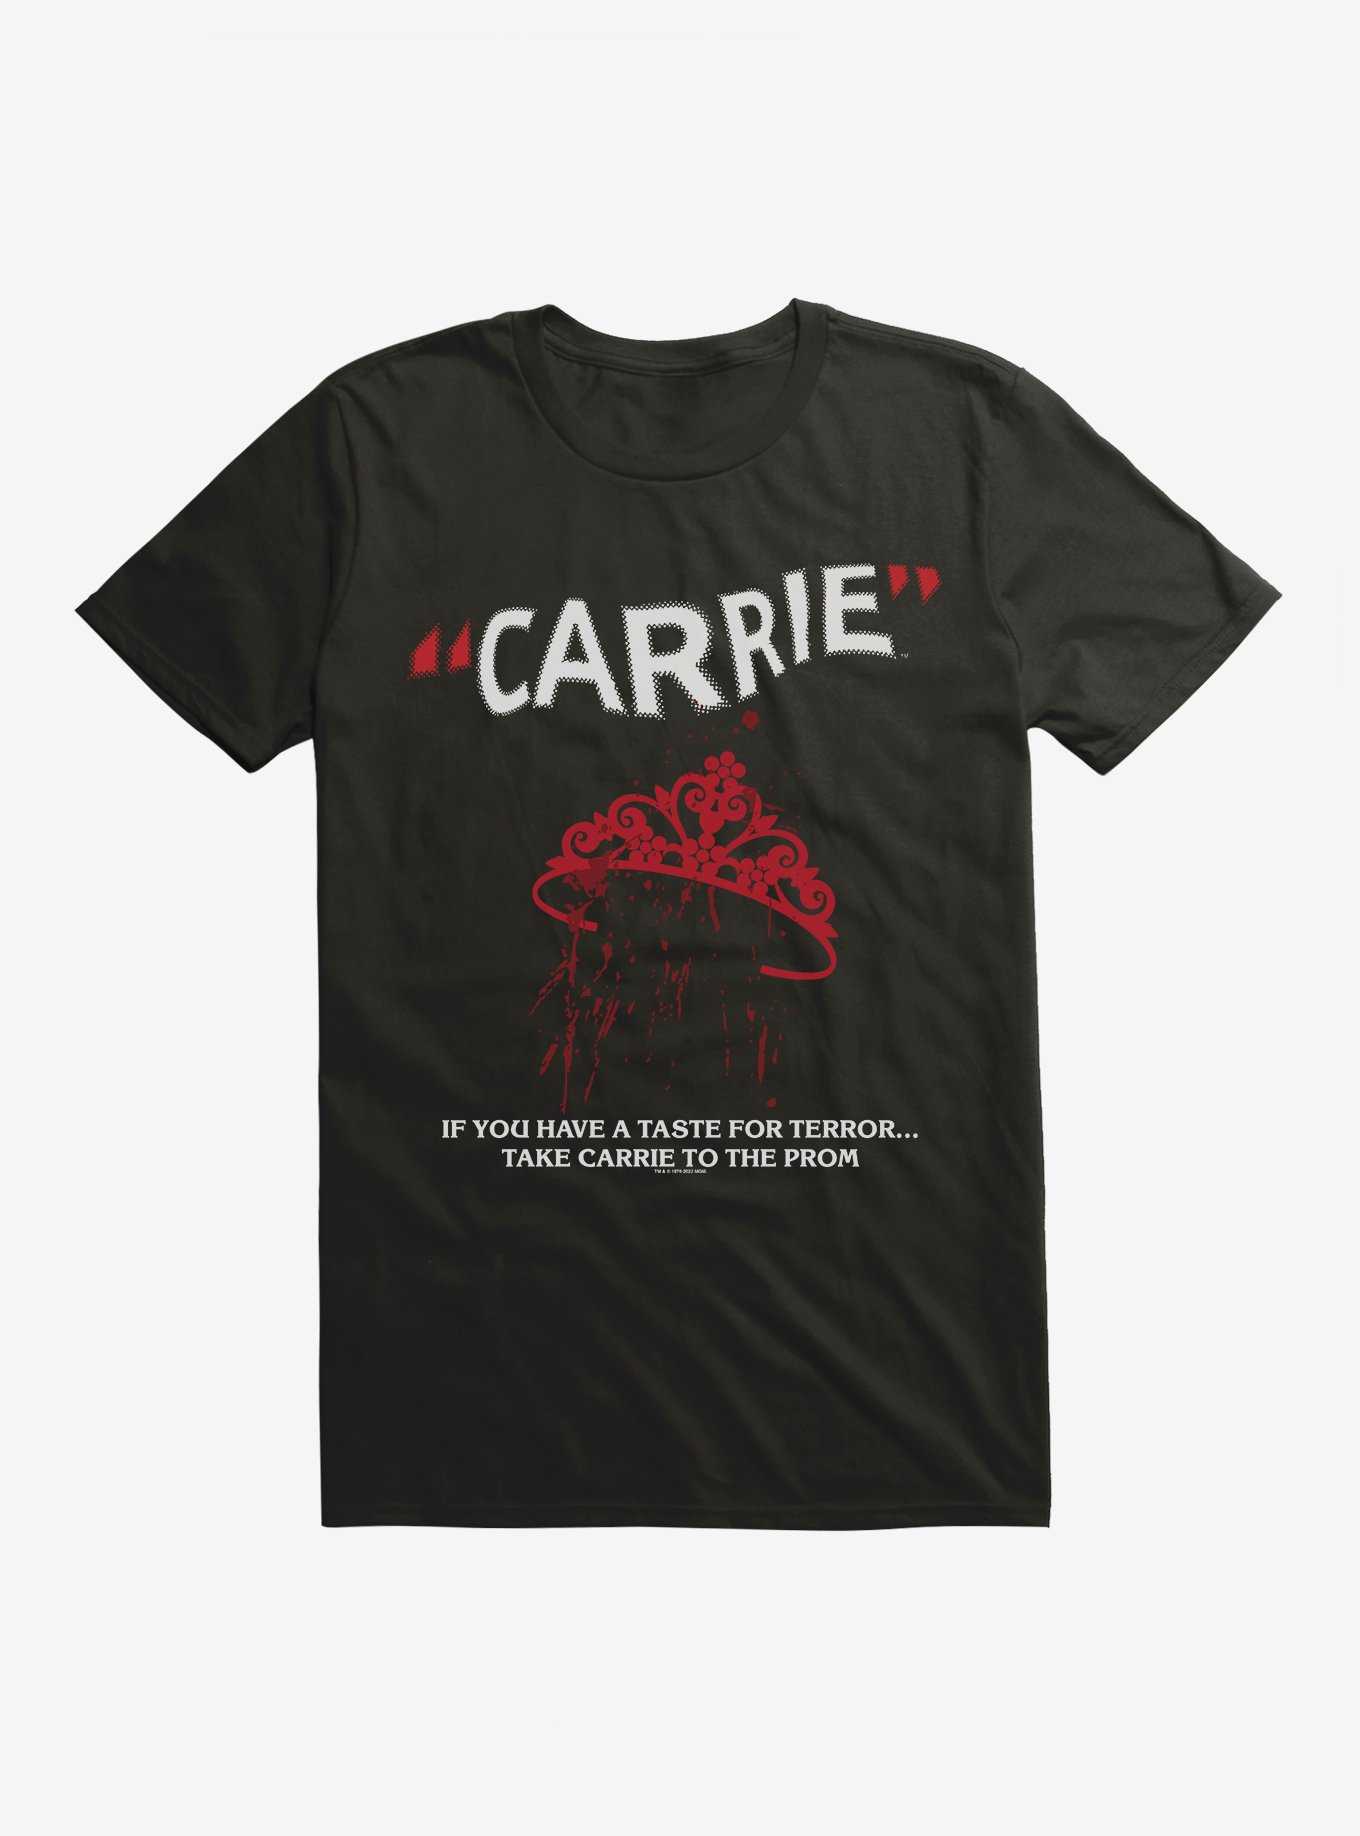 Carrie 1976 Crown Splatter T-Shirt, , hi-res